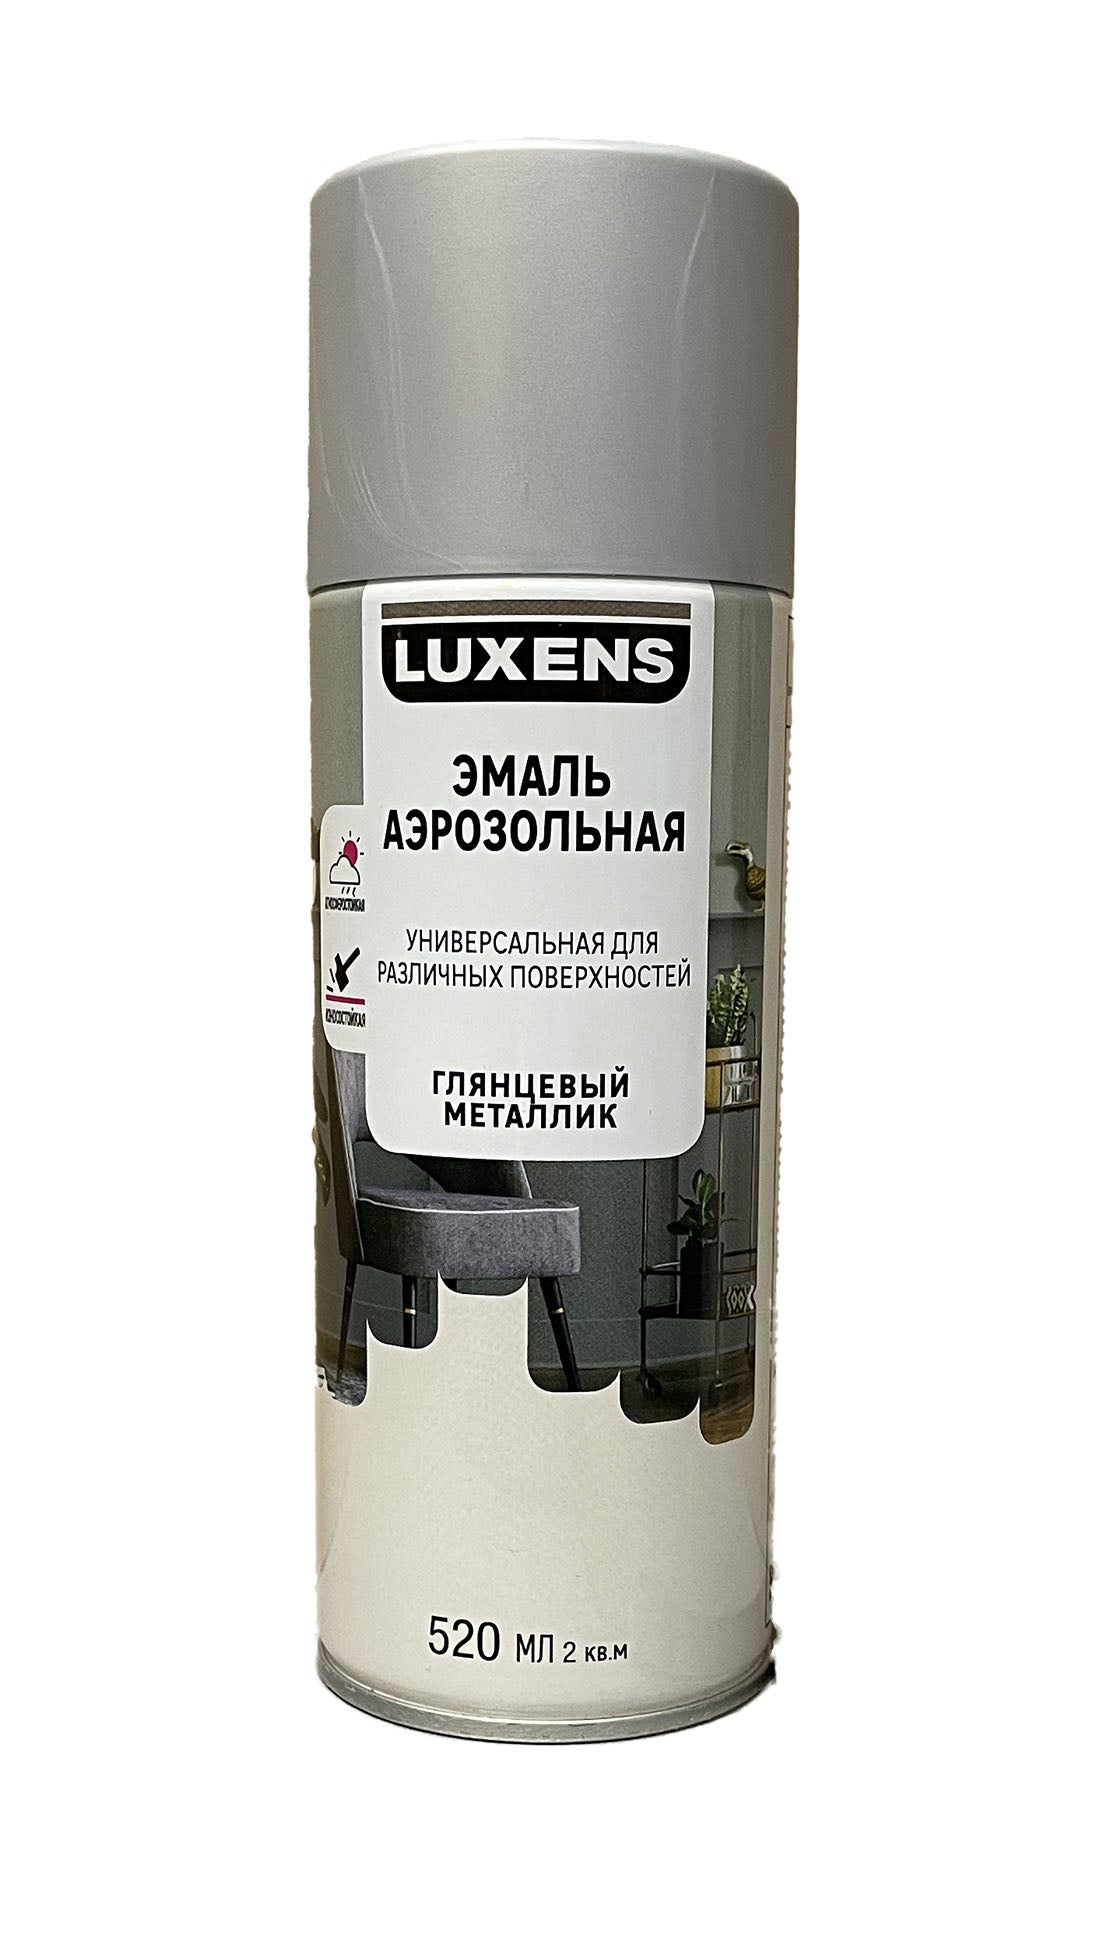 LUX-83237453-G-520 - аэрозольная универсальная  эмаль Luxens, цвет: серебристый глянцевый металлик, баллон: 520 мл.